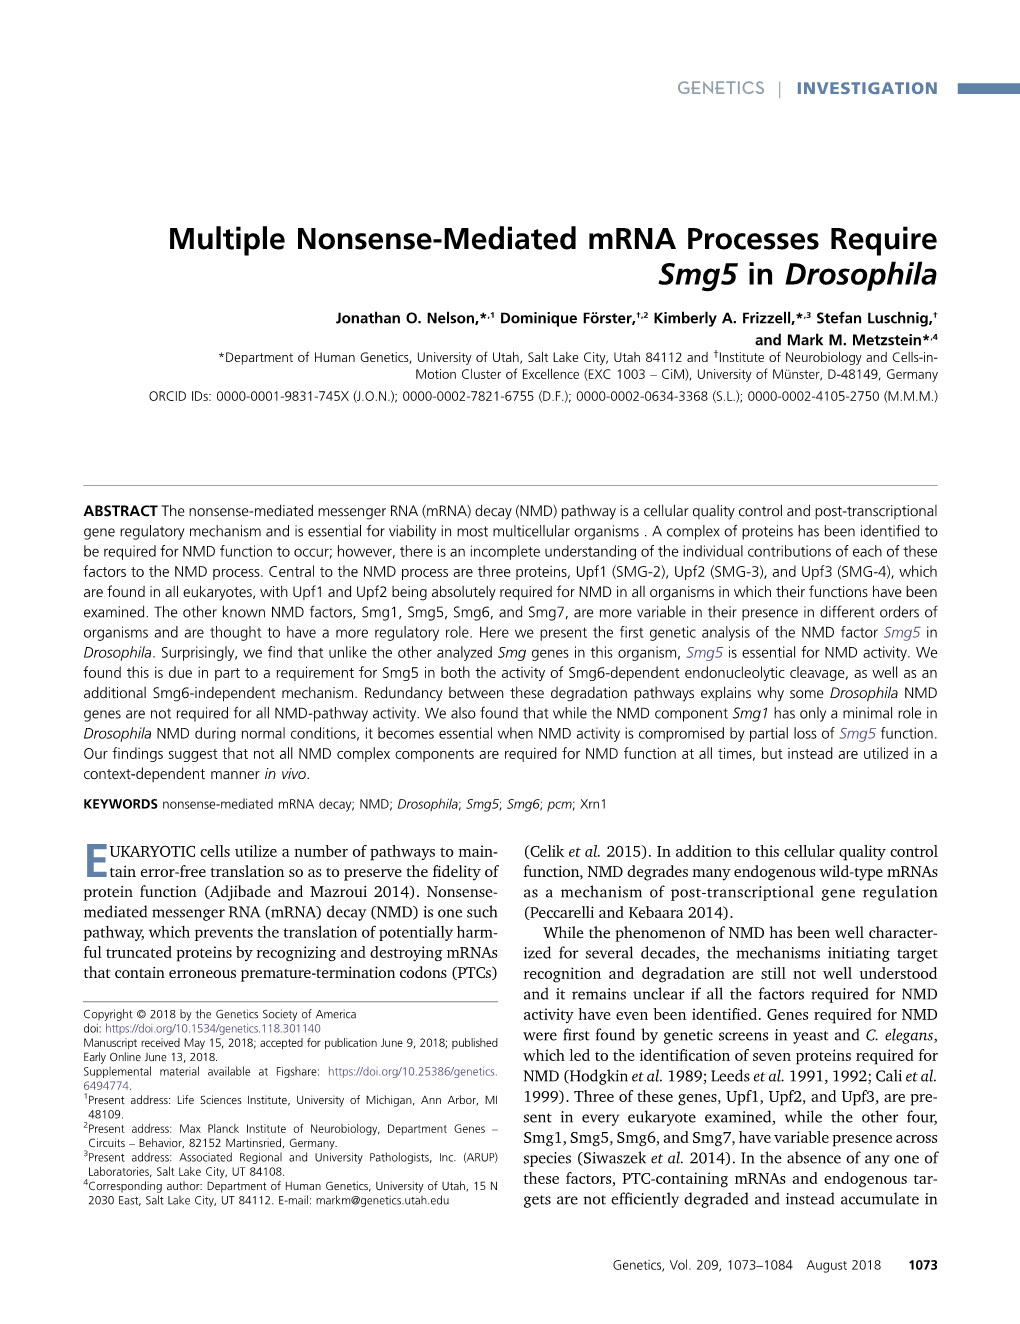 Multiple Nonsense-Mediated Mrna Processes Require Smg5 in Drosophila